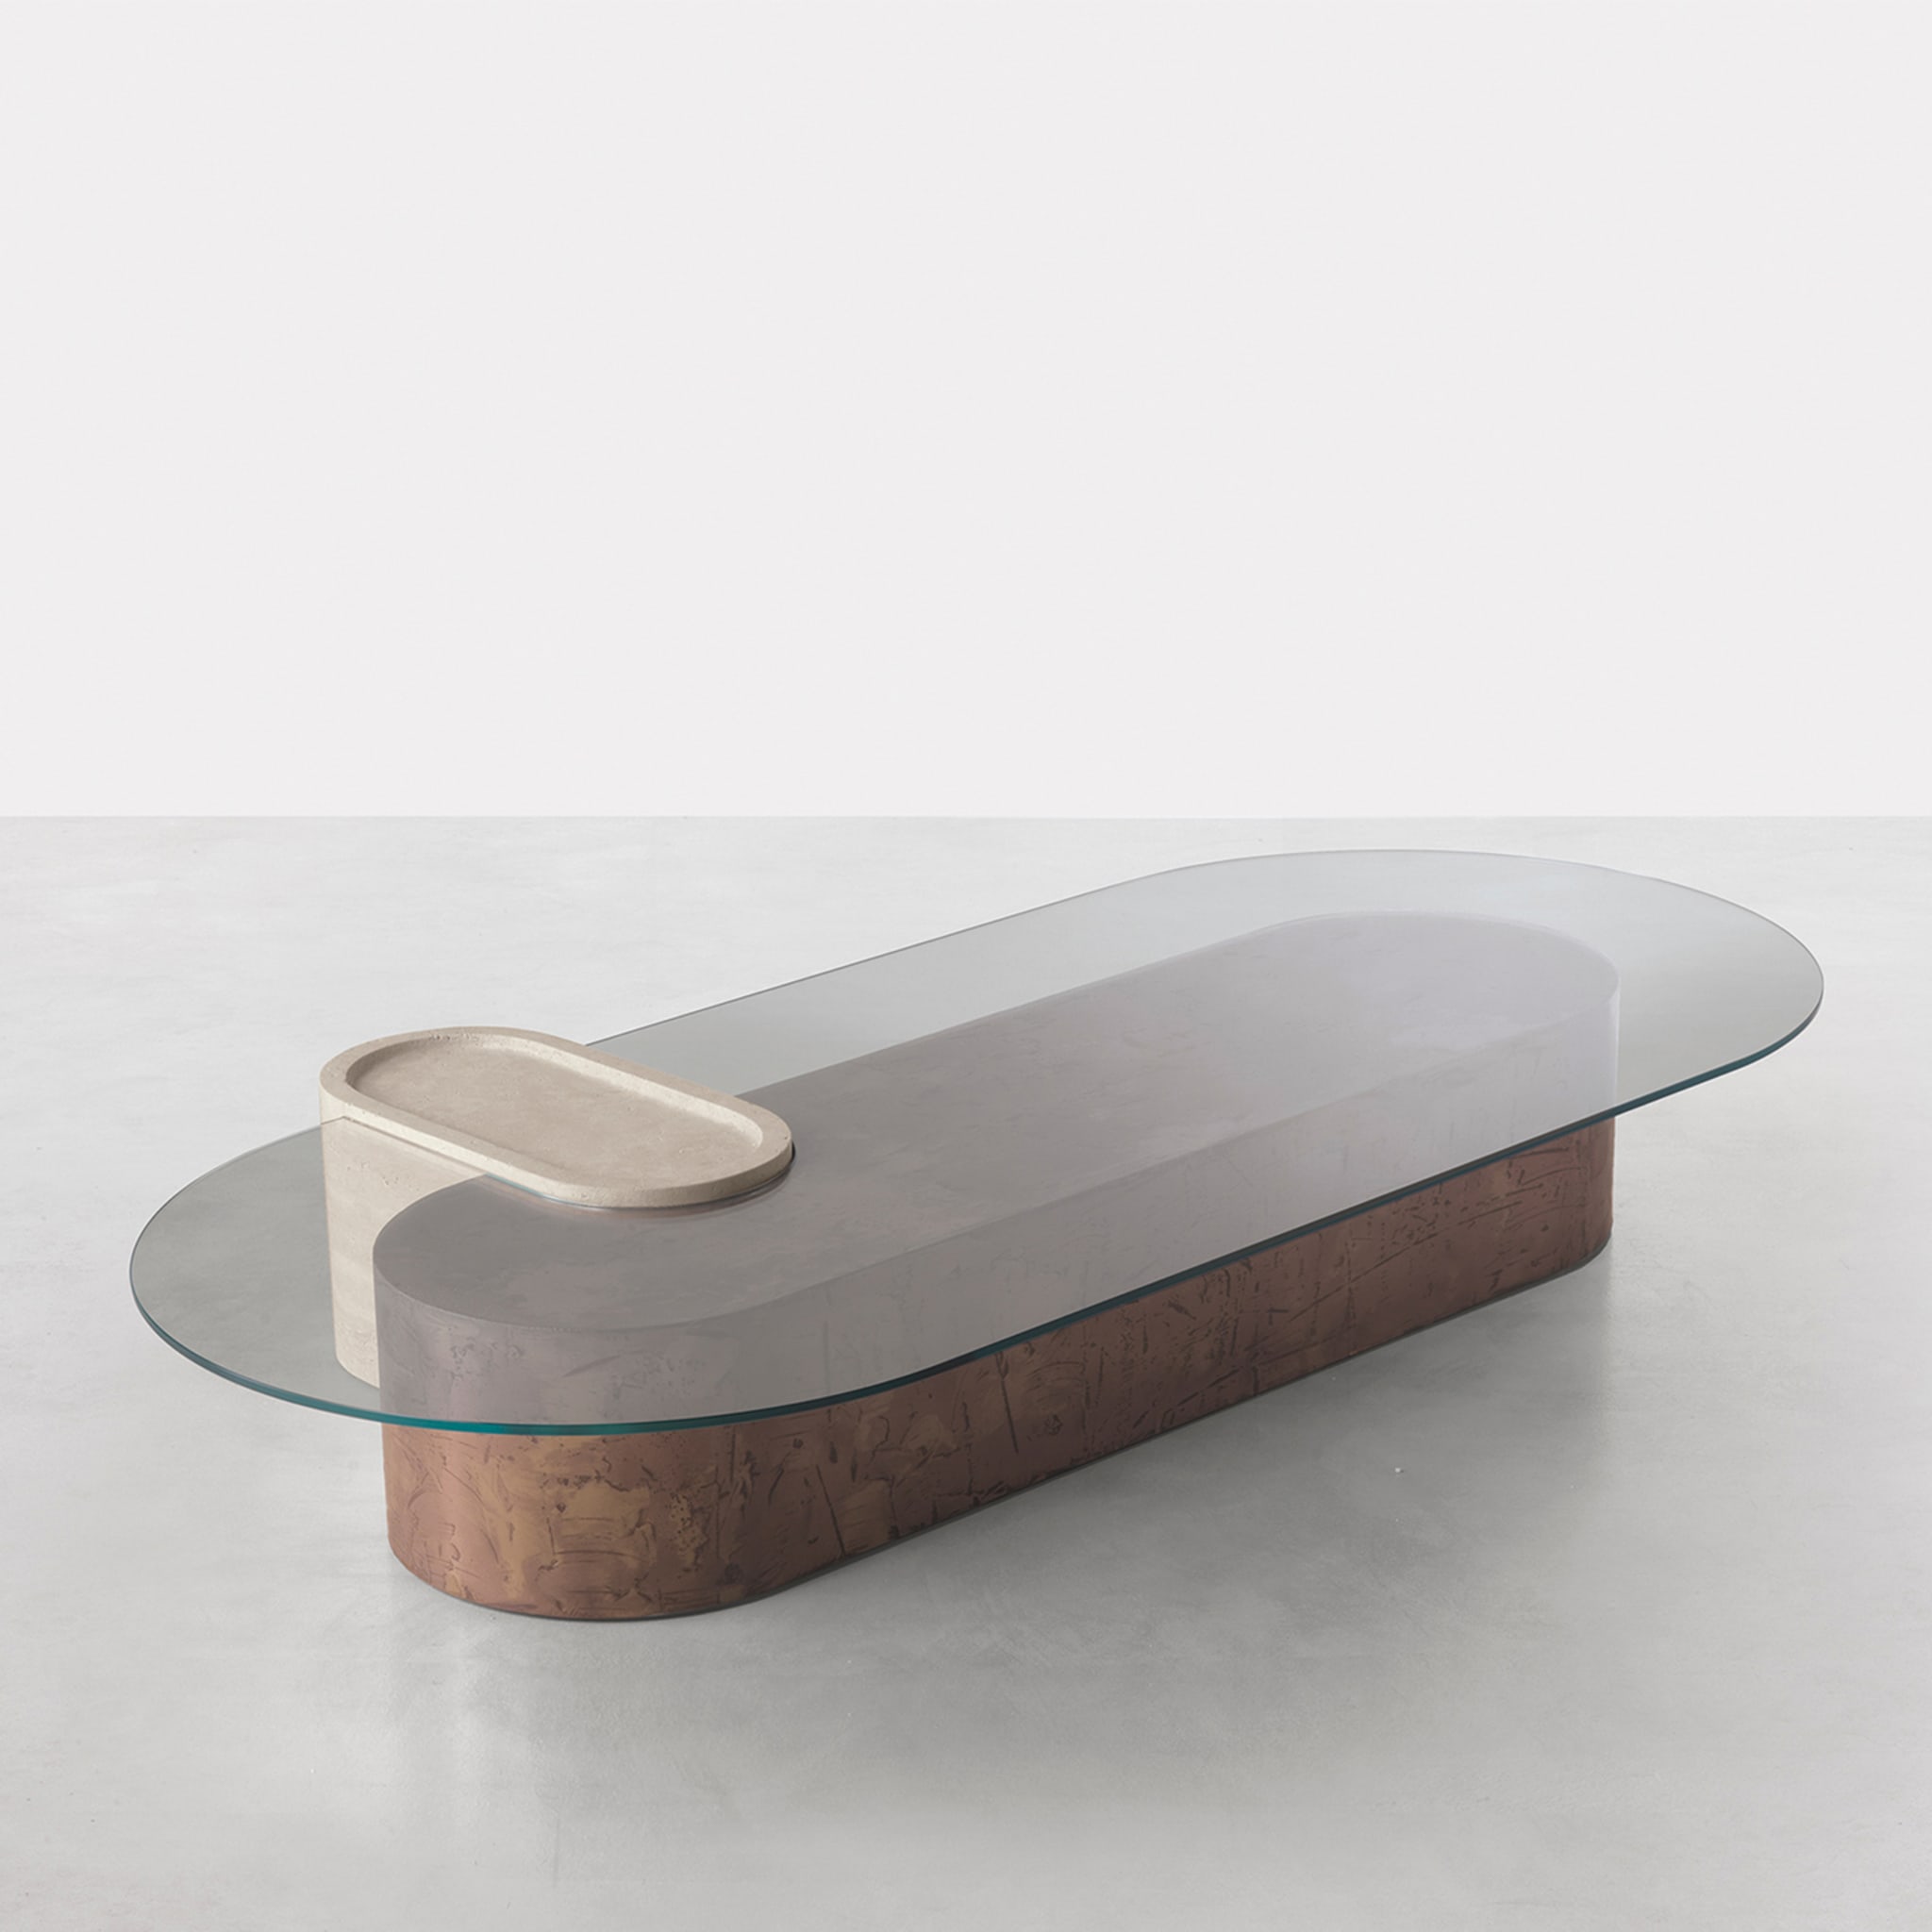 Saturnia Coffee Table by Dainelli Studio - Alternative view 2